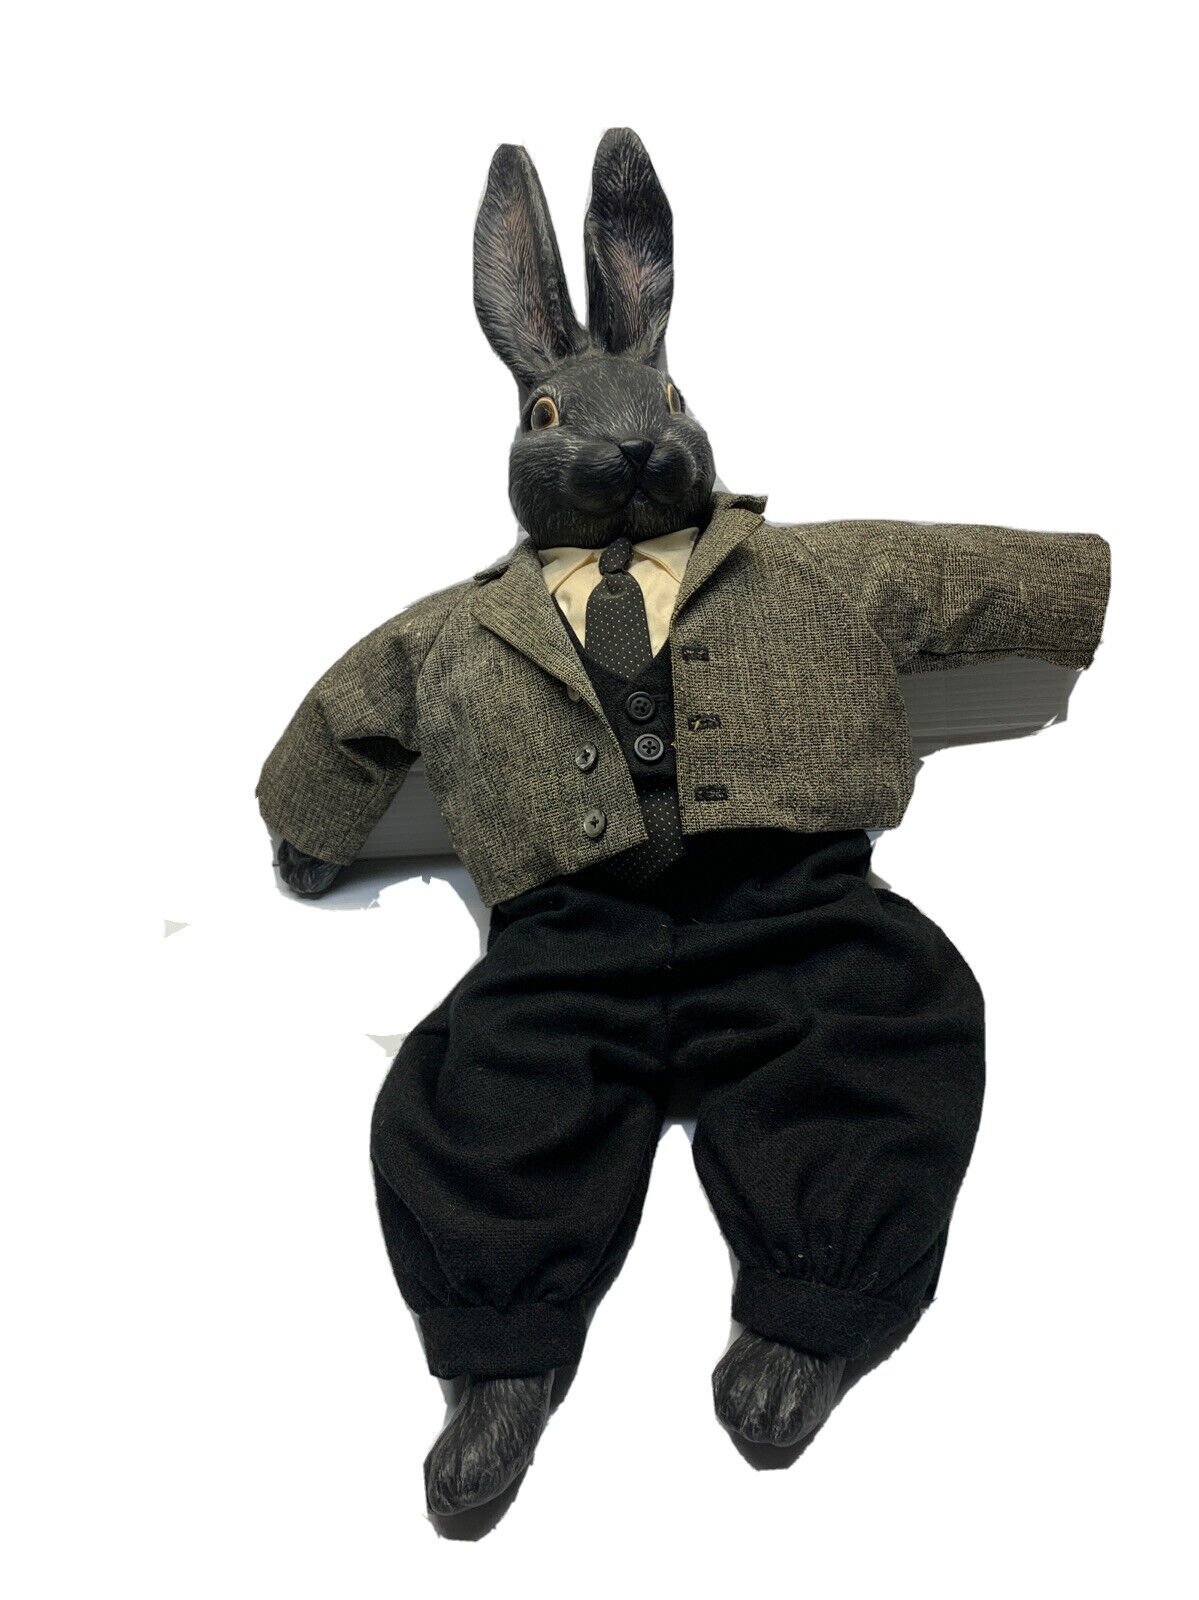 Vintage Stuffed Rabbit Blavk Clay/Ceramic Head, Hands & Feet, Tweed Style Suit.